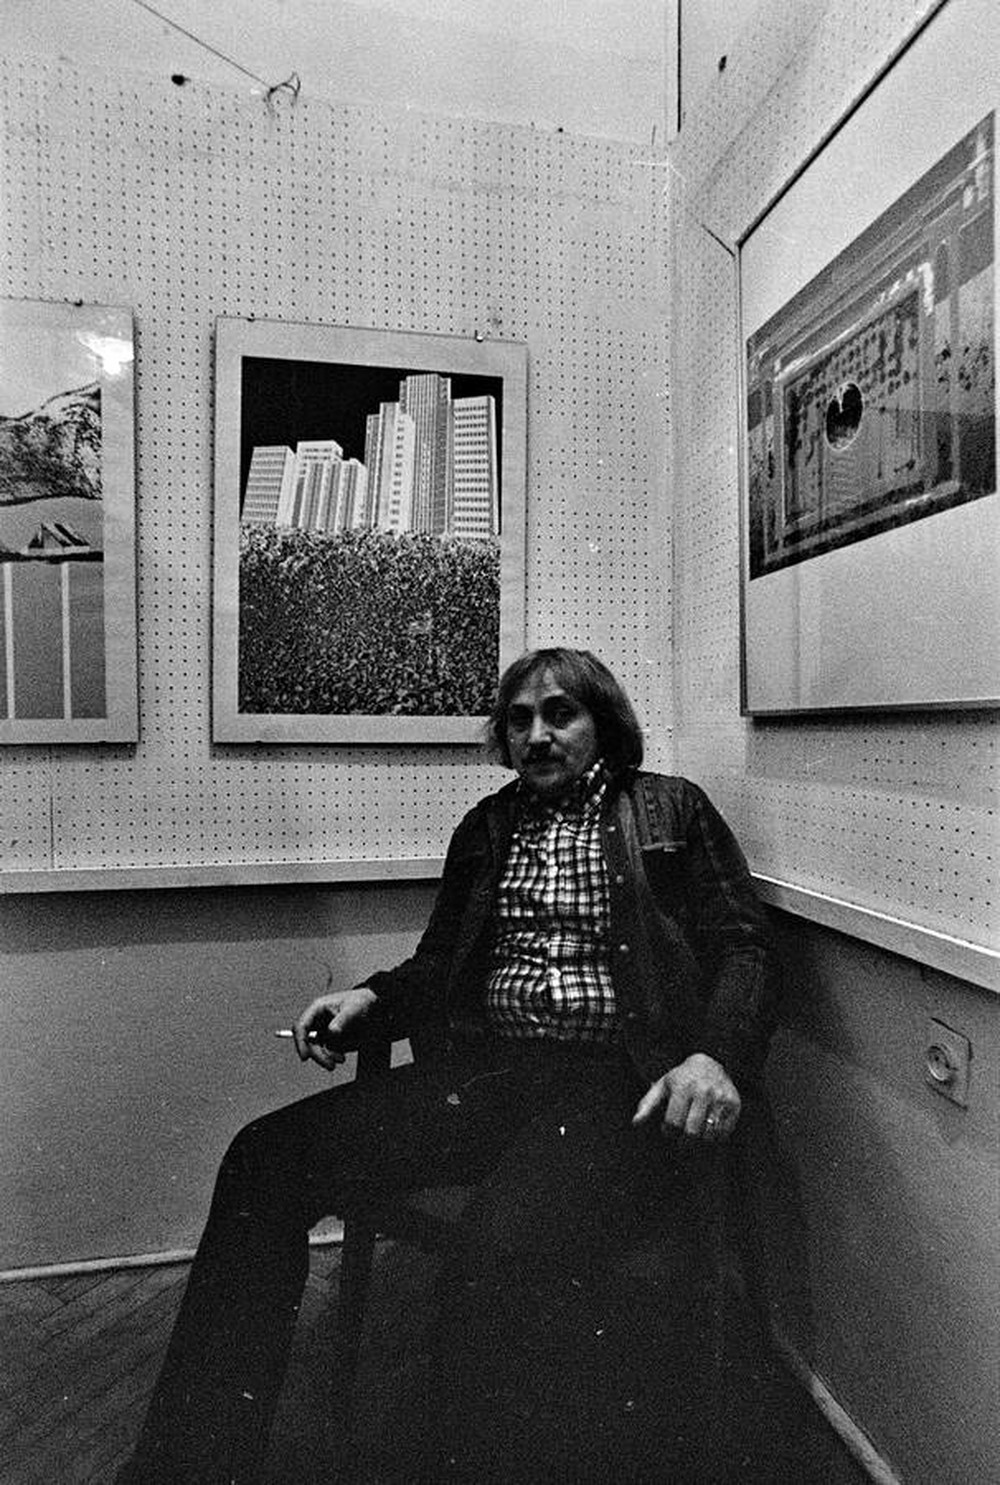 Janek Sylla, "Graphic - Screen Print", Repassage Gallery, Warsaw, 1973